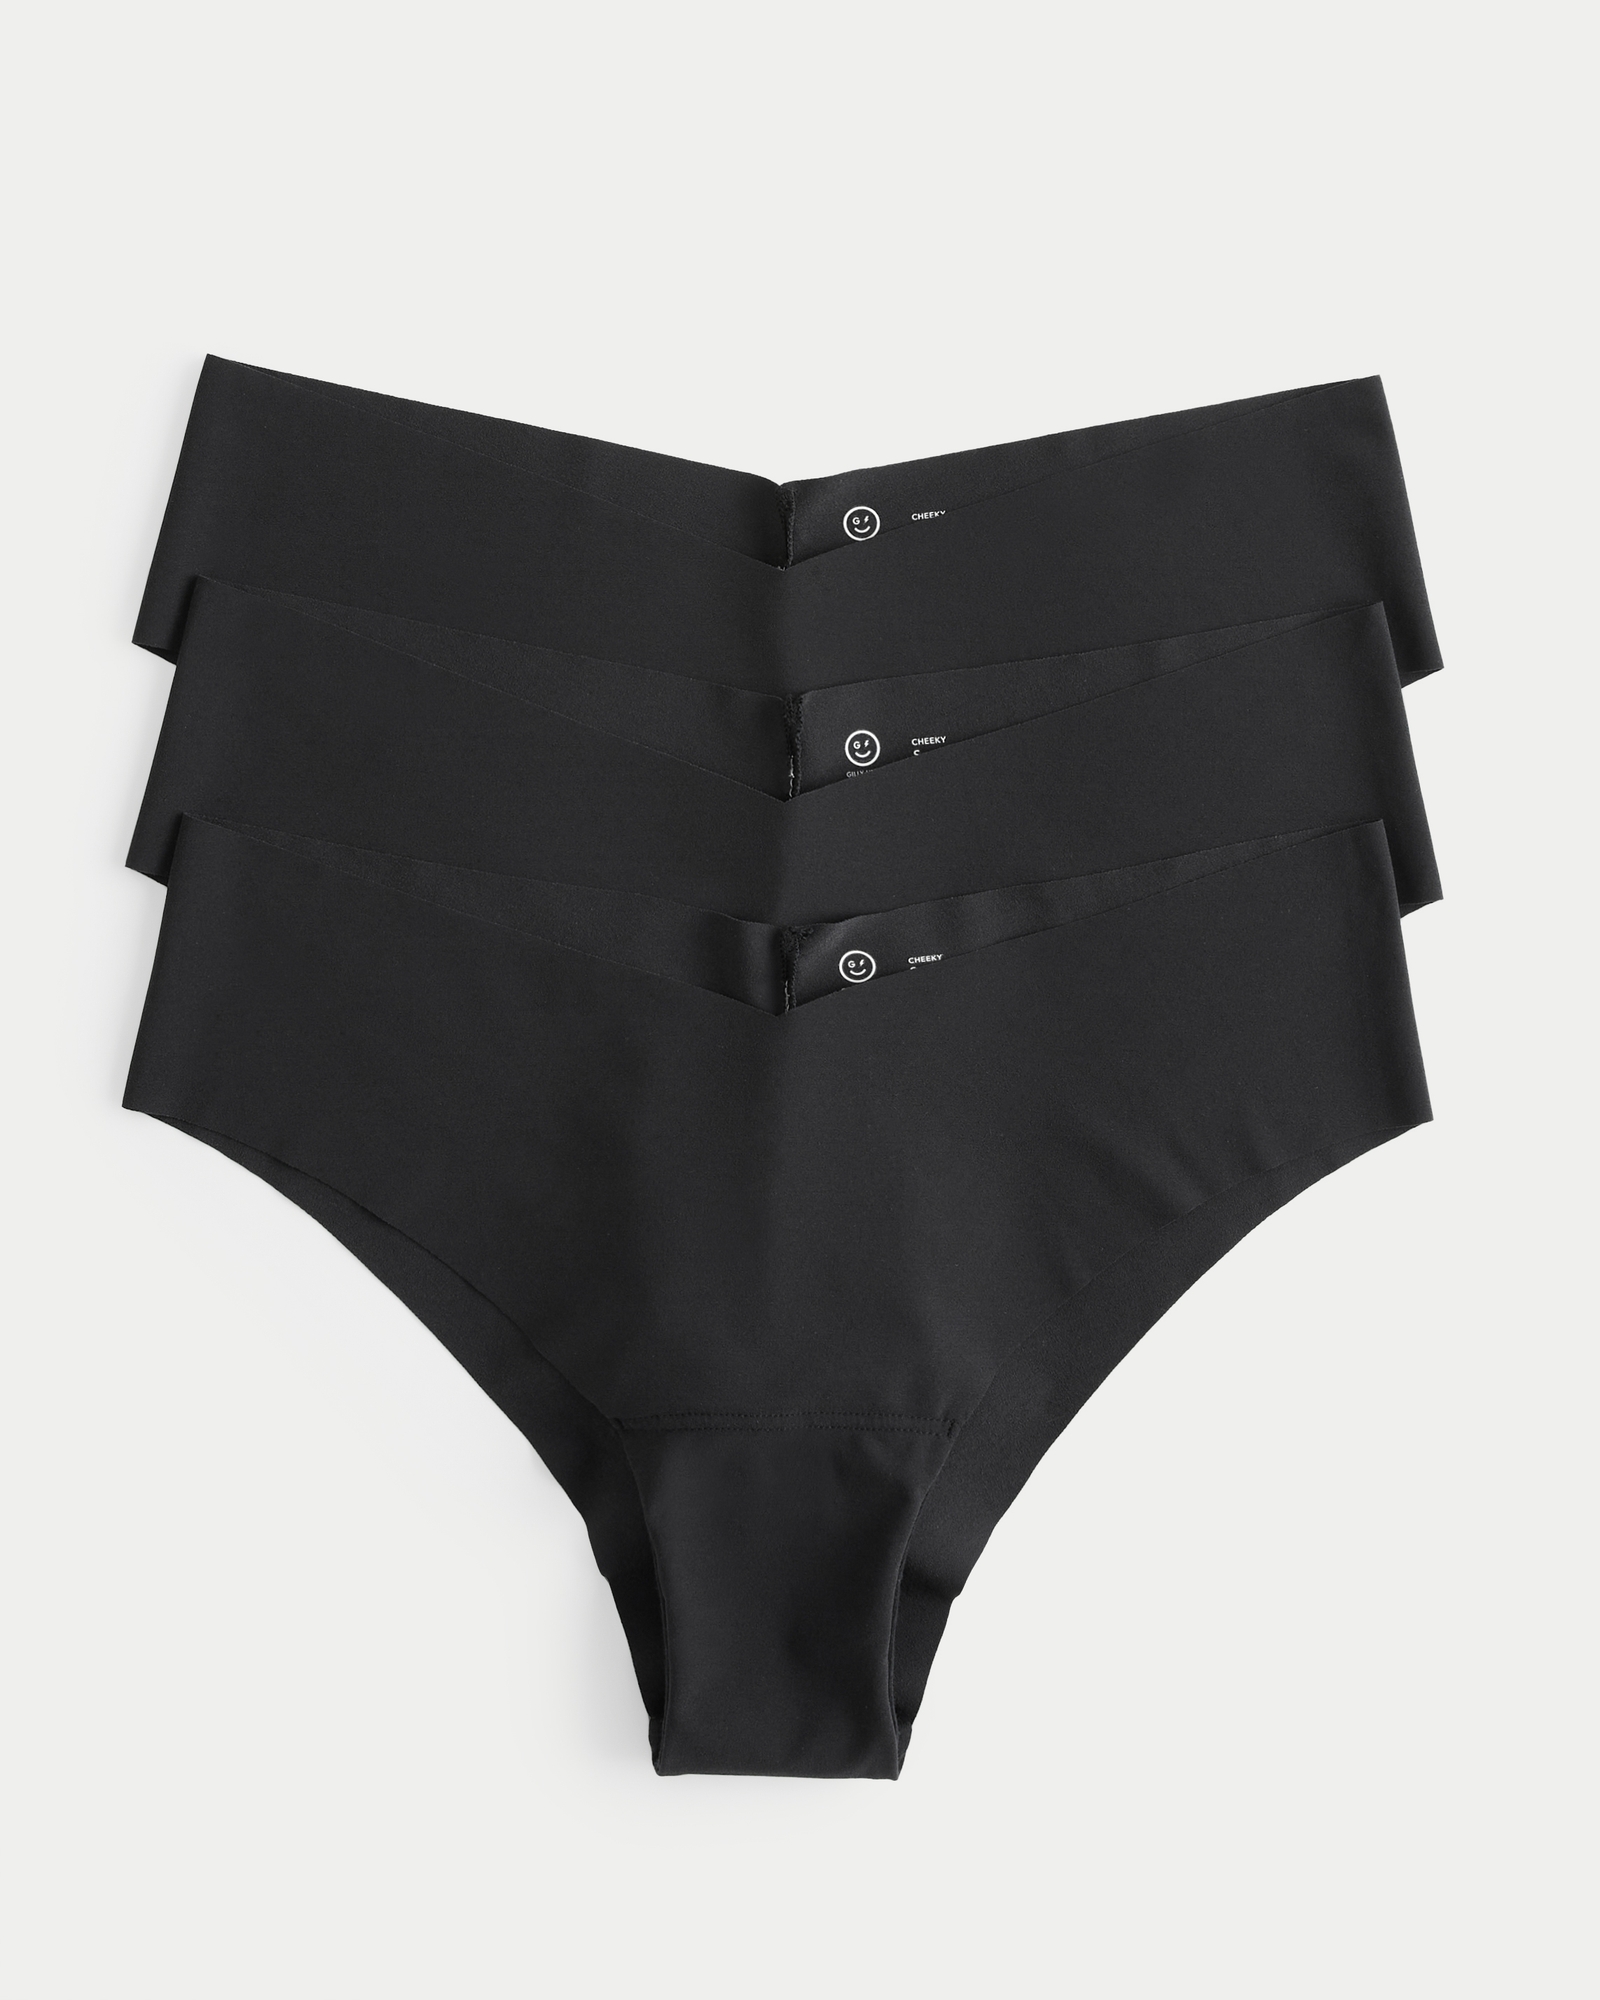 Hollister Gilly Hicks No-show Cheeky Underwear in Black